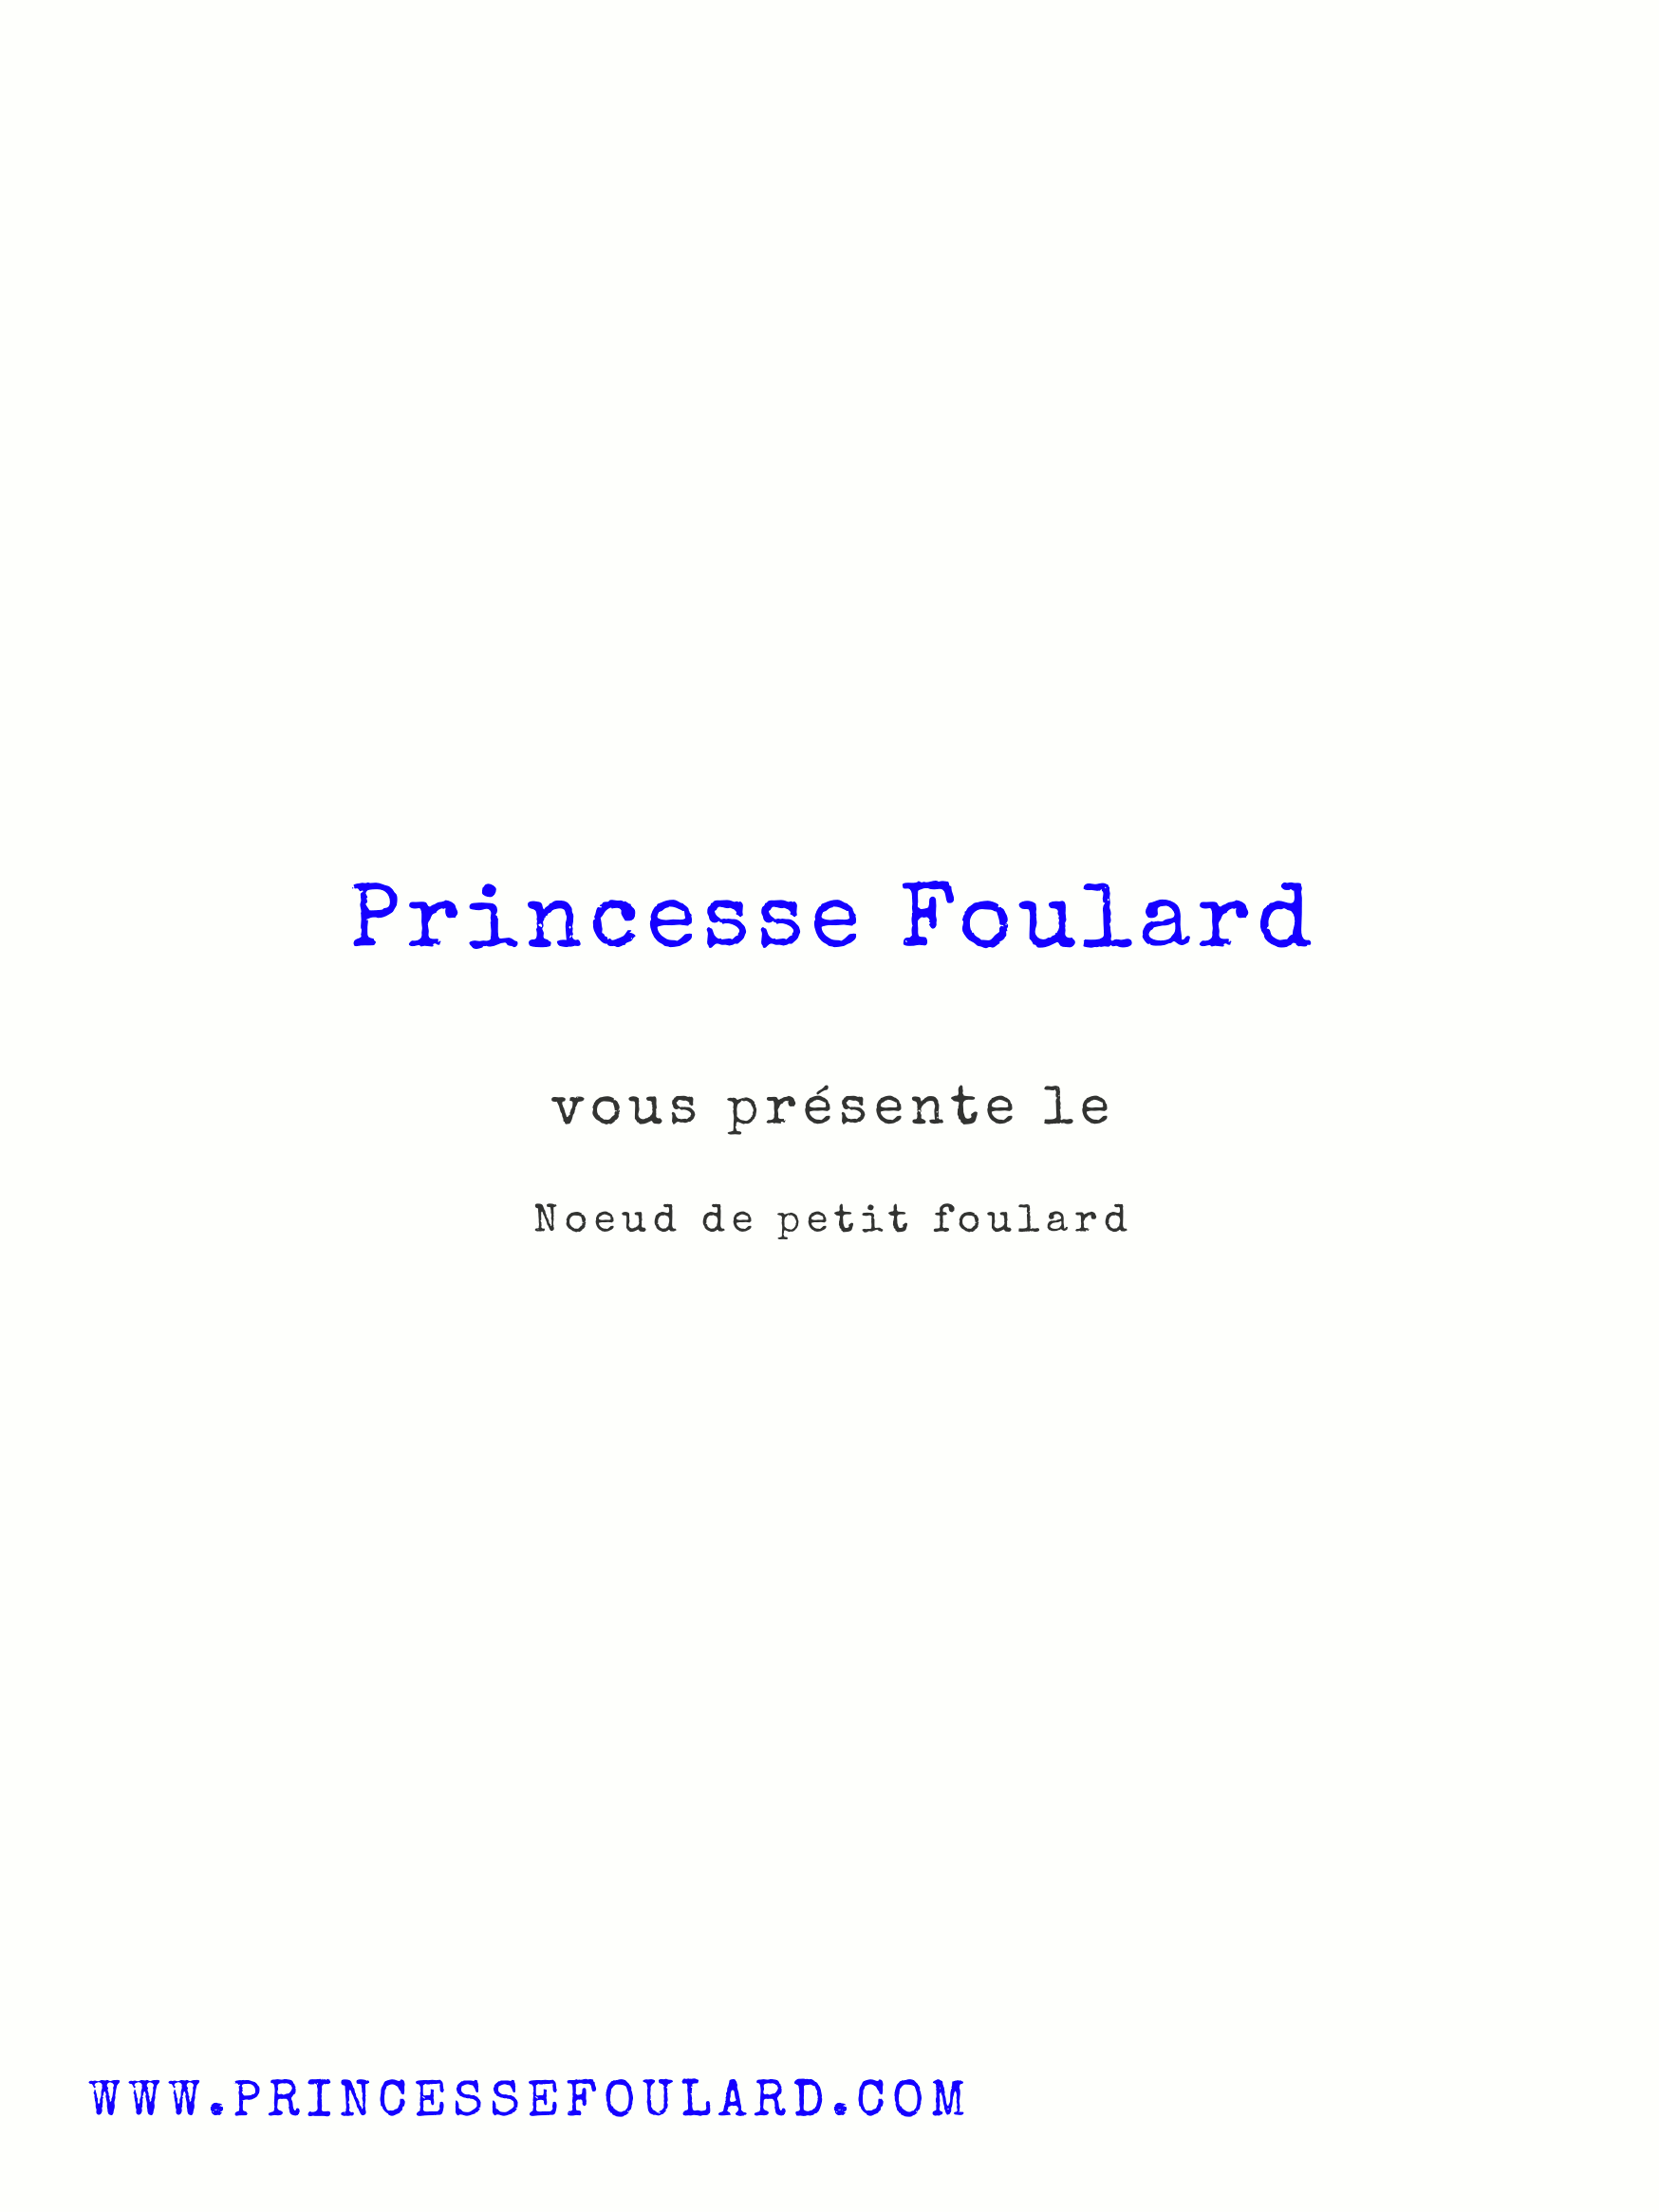 Tuto Noeud de petit Foulard par "Princesse Foulard"